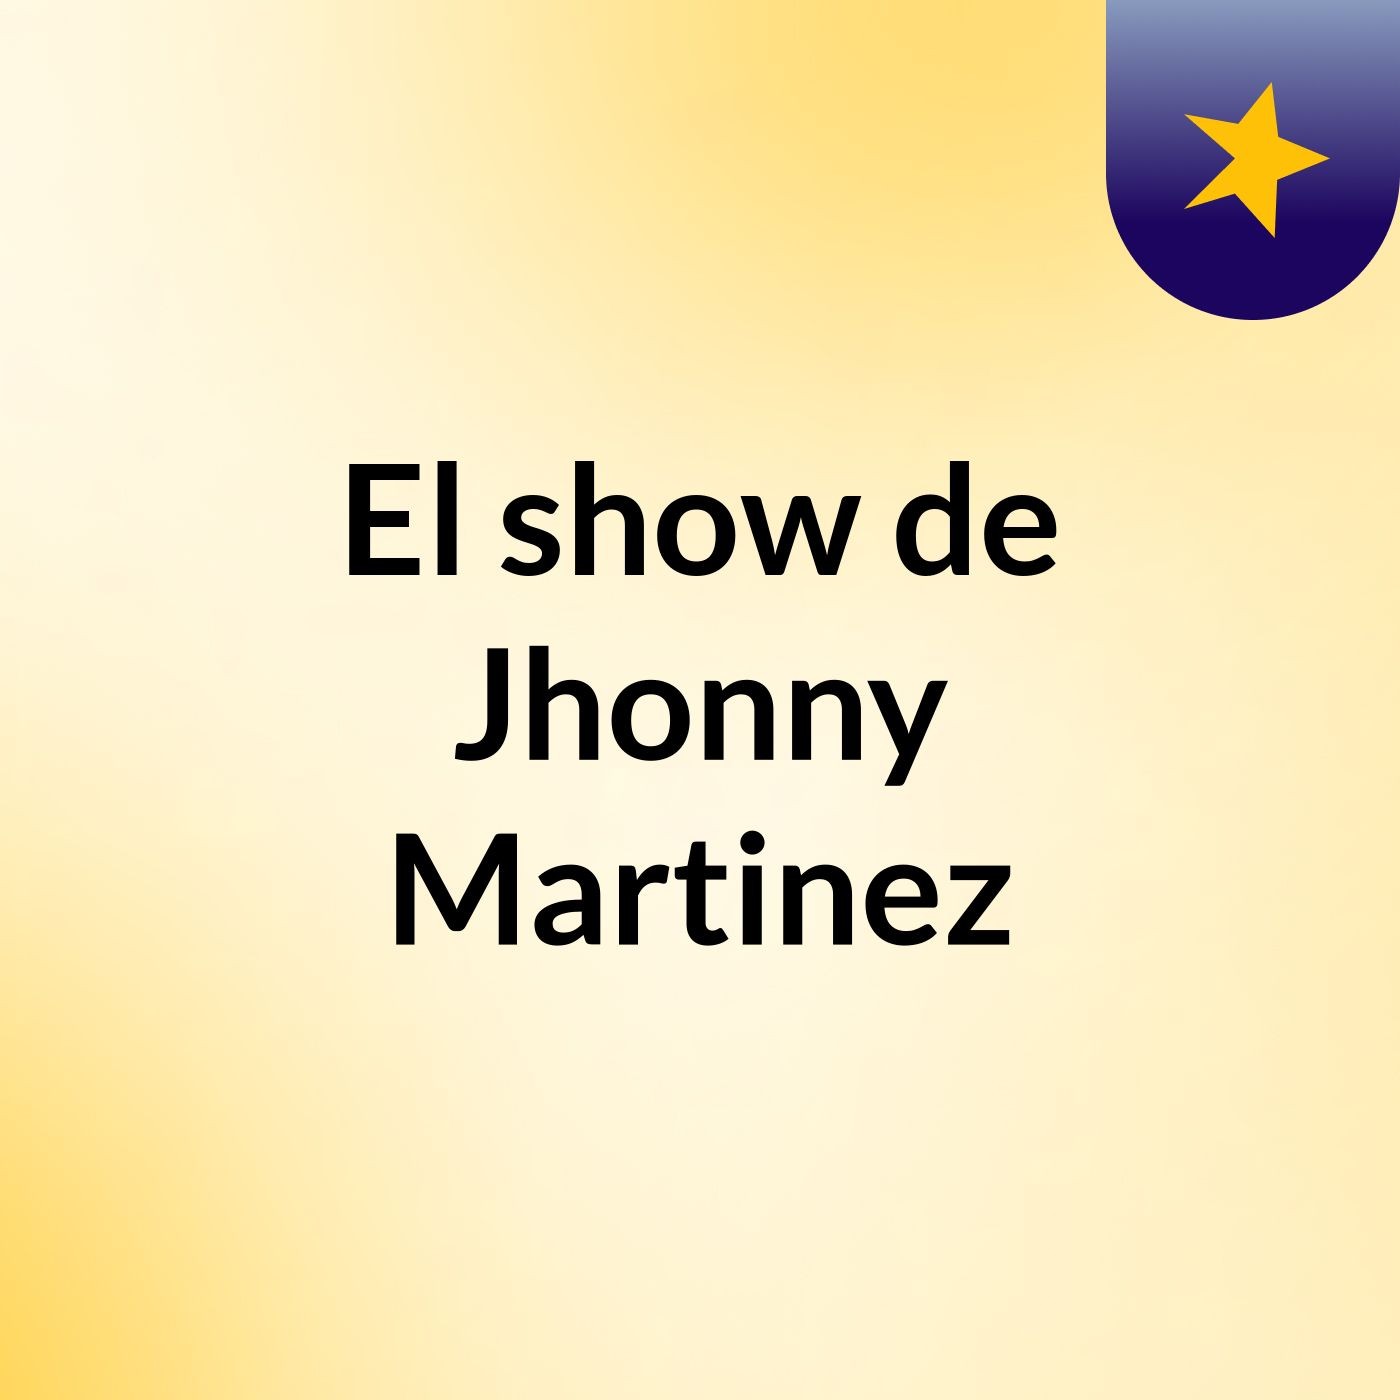 El show de Jhonny Martinez